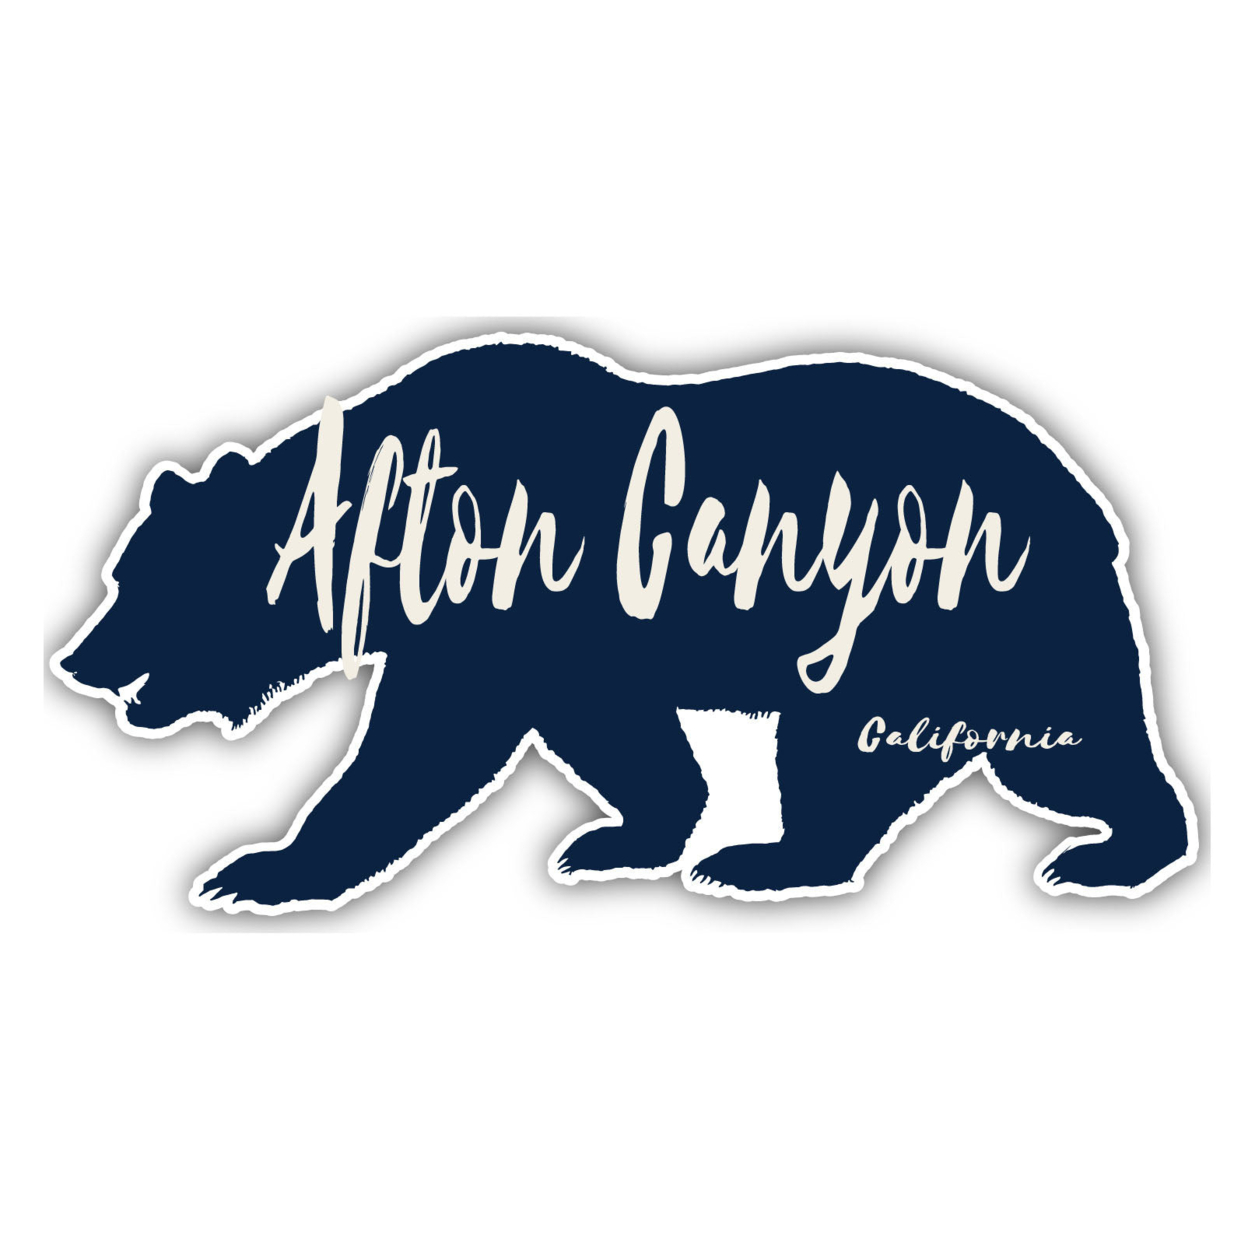 Afton Canyon California Souvenir Decorative Stickers (Choose Theme And Size) - Single Unit, 12-Inch, Bear